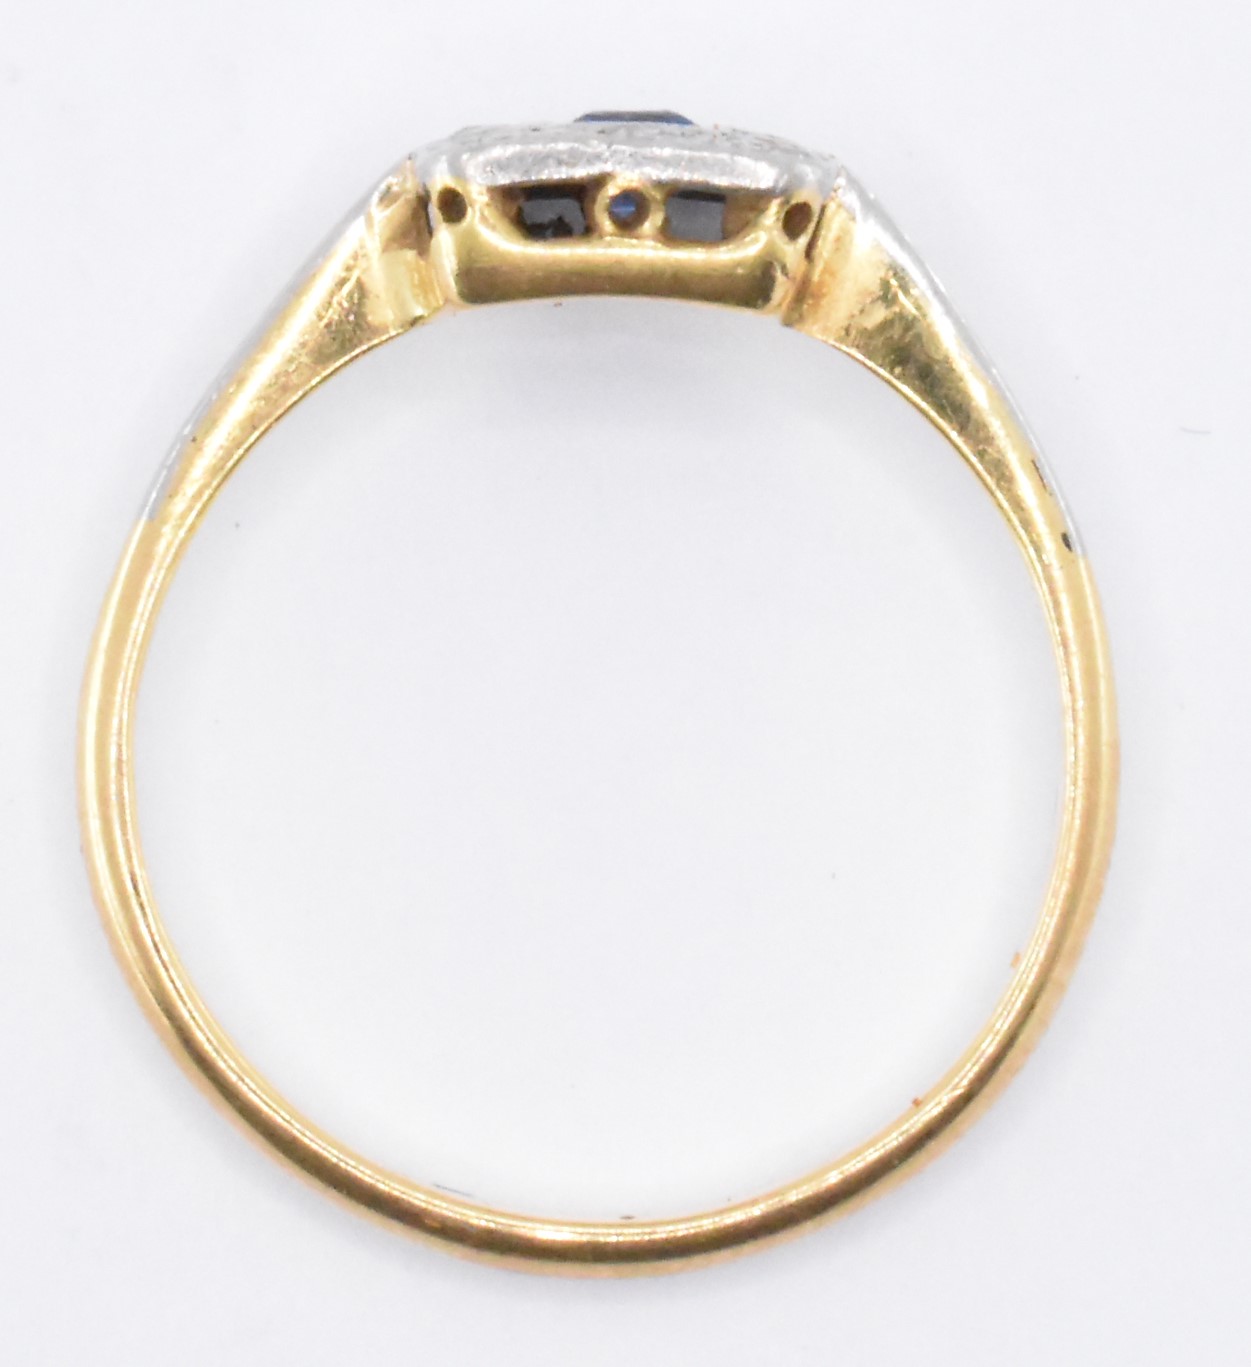 EDWARDIAN SAPPHIRE & DIAMOND RING - Image 6 of 6